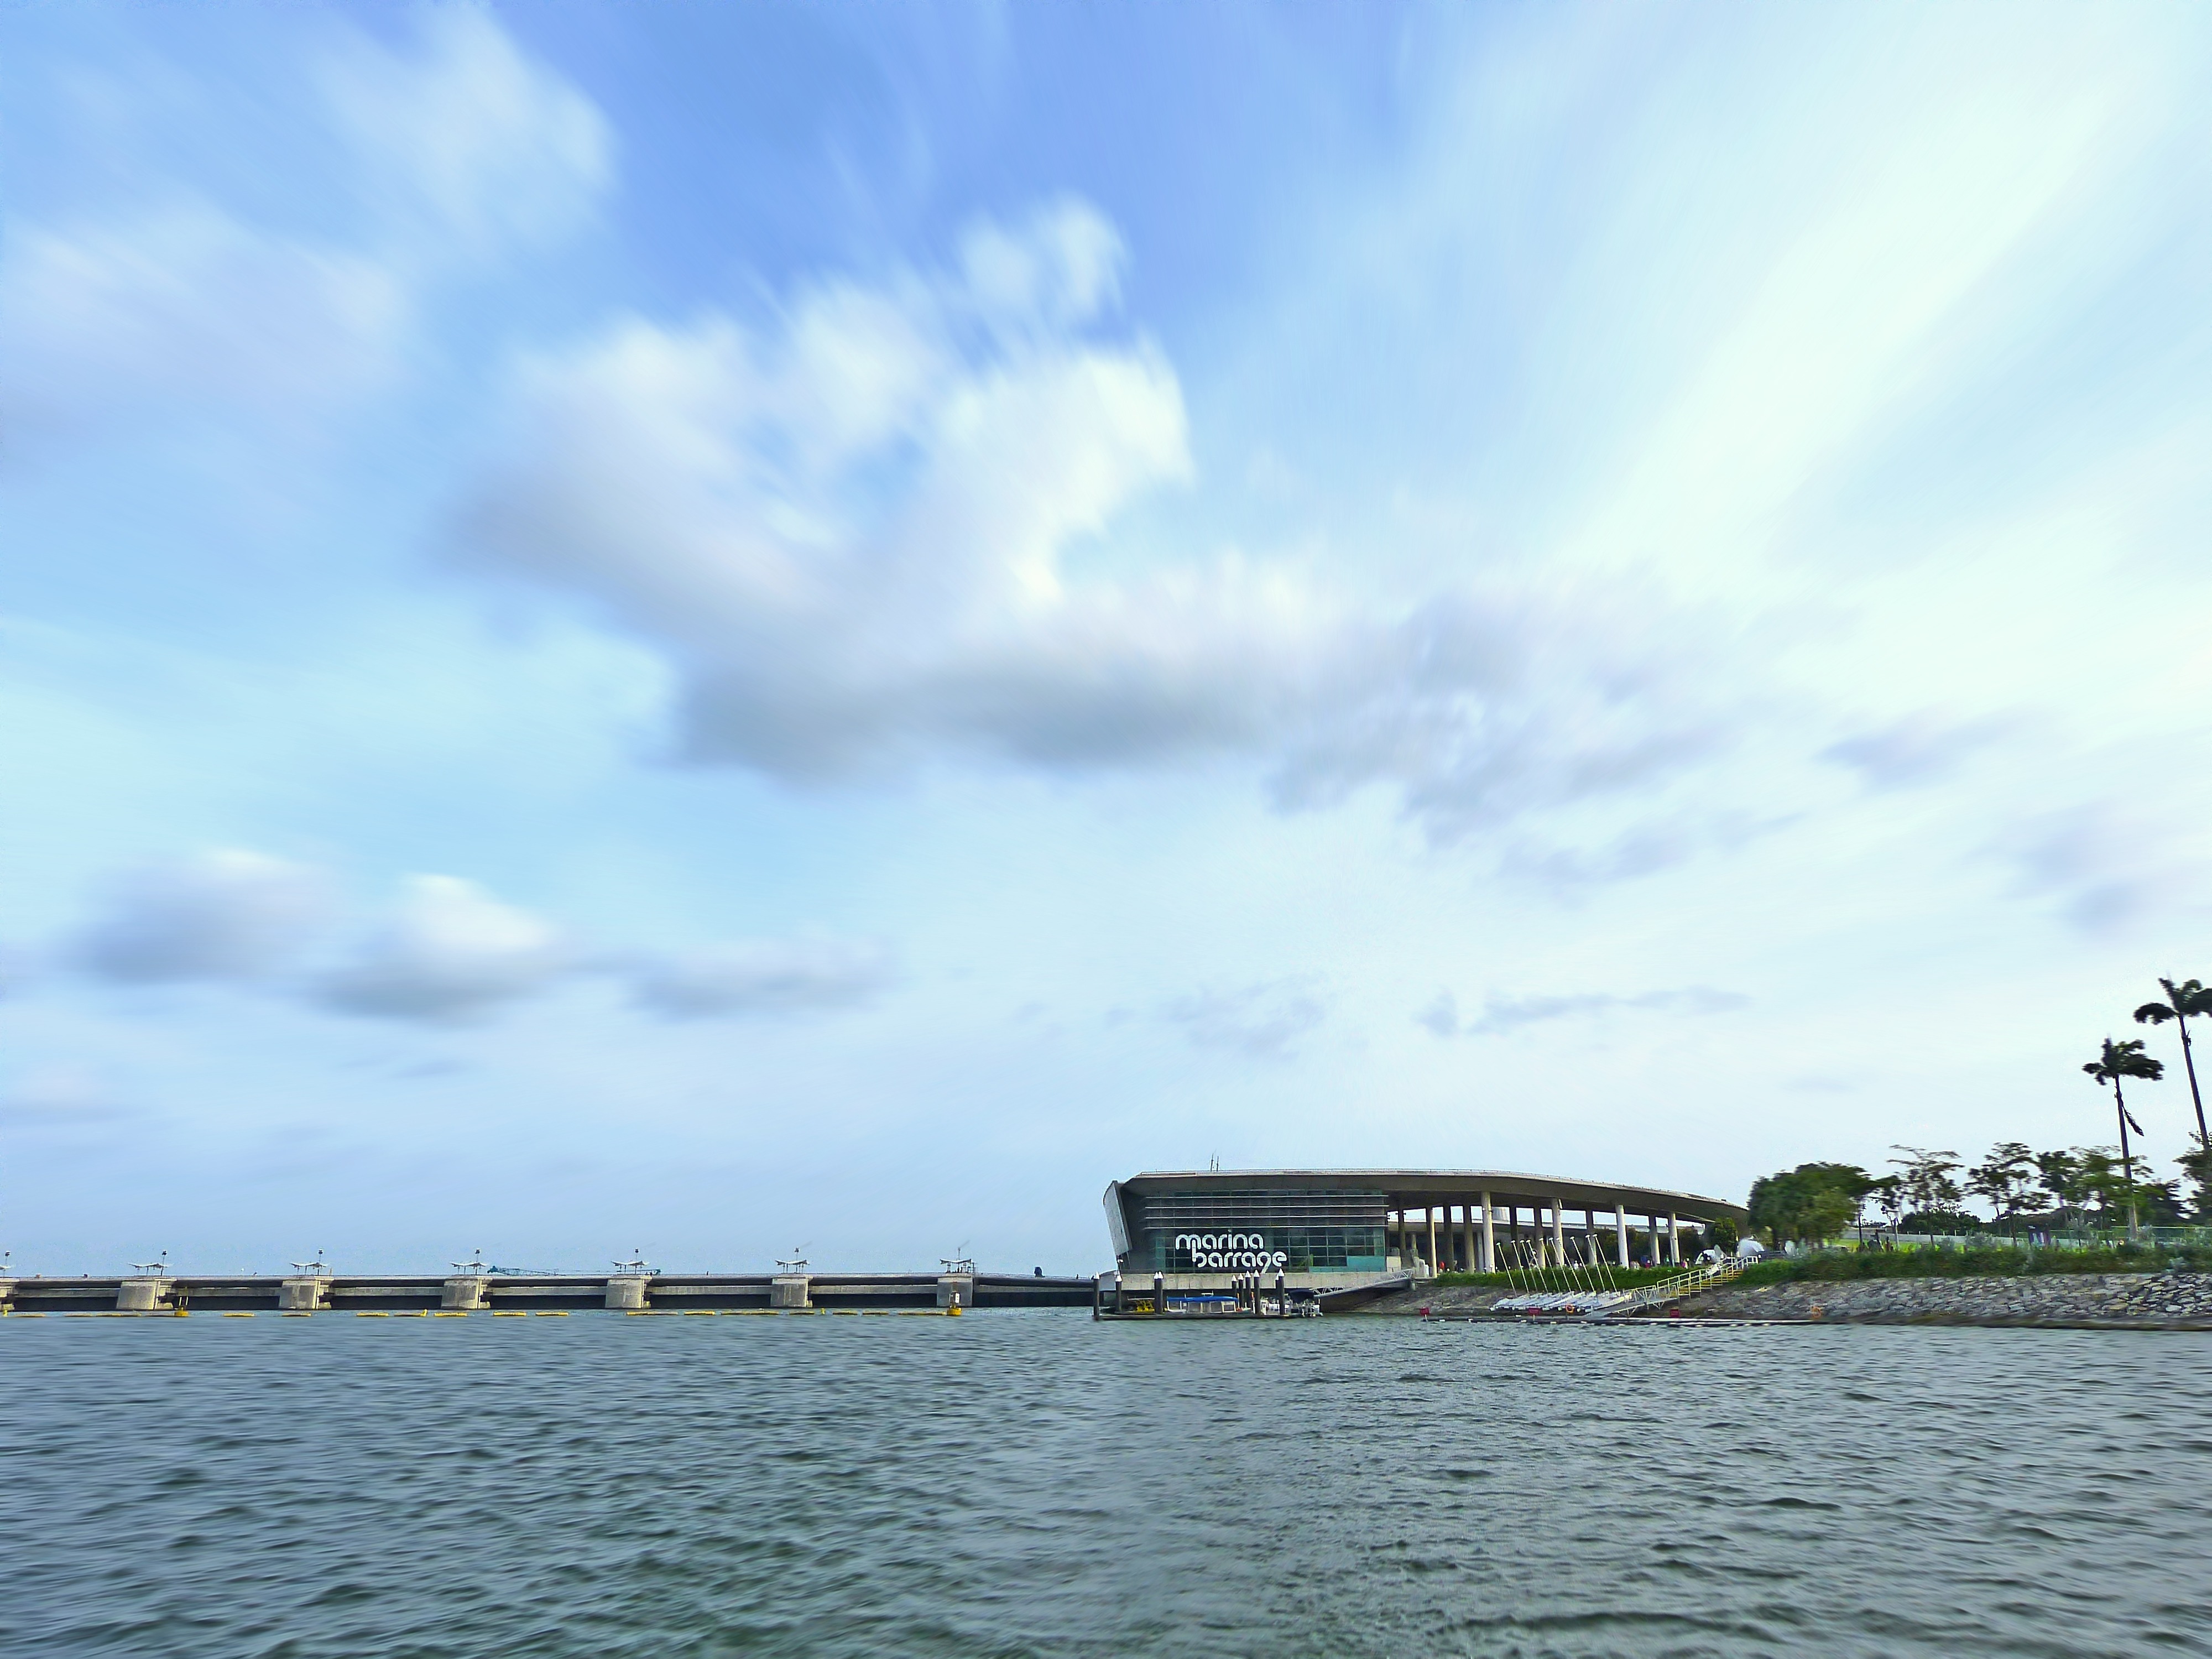 Marina barrage photo